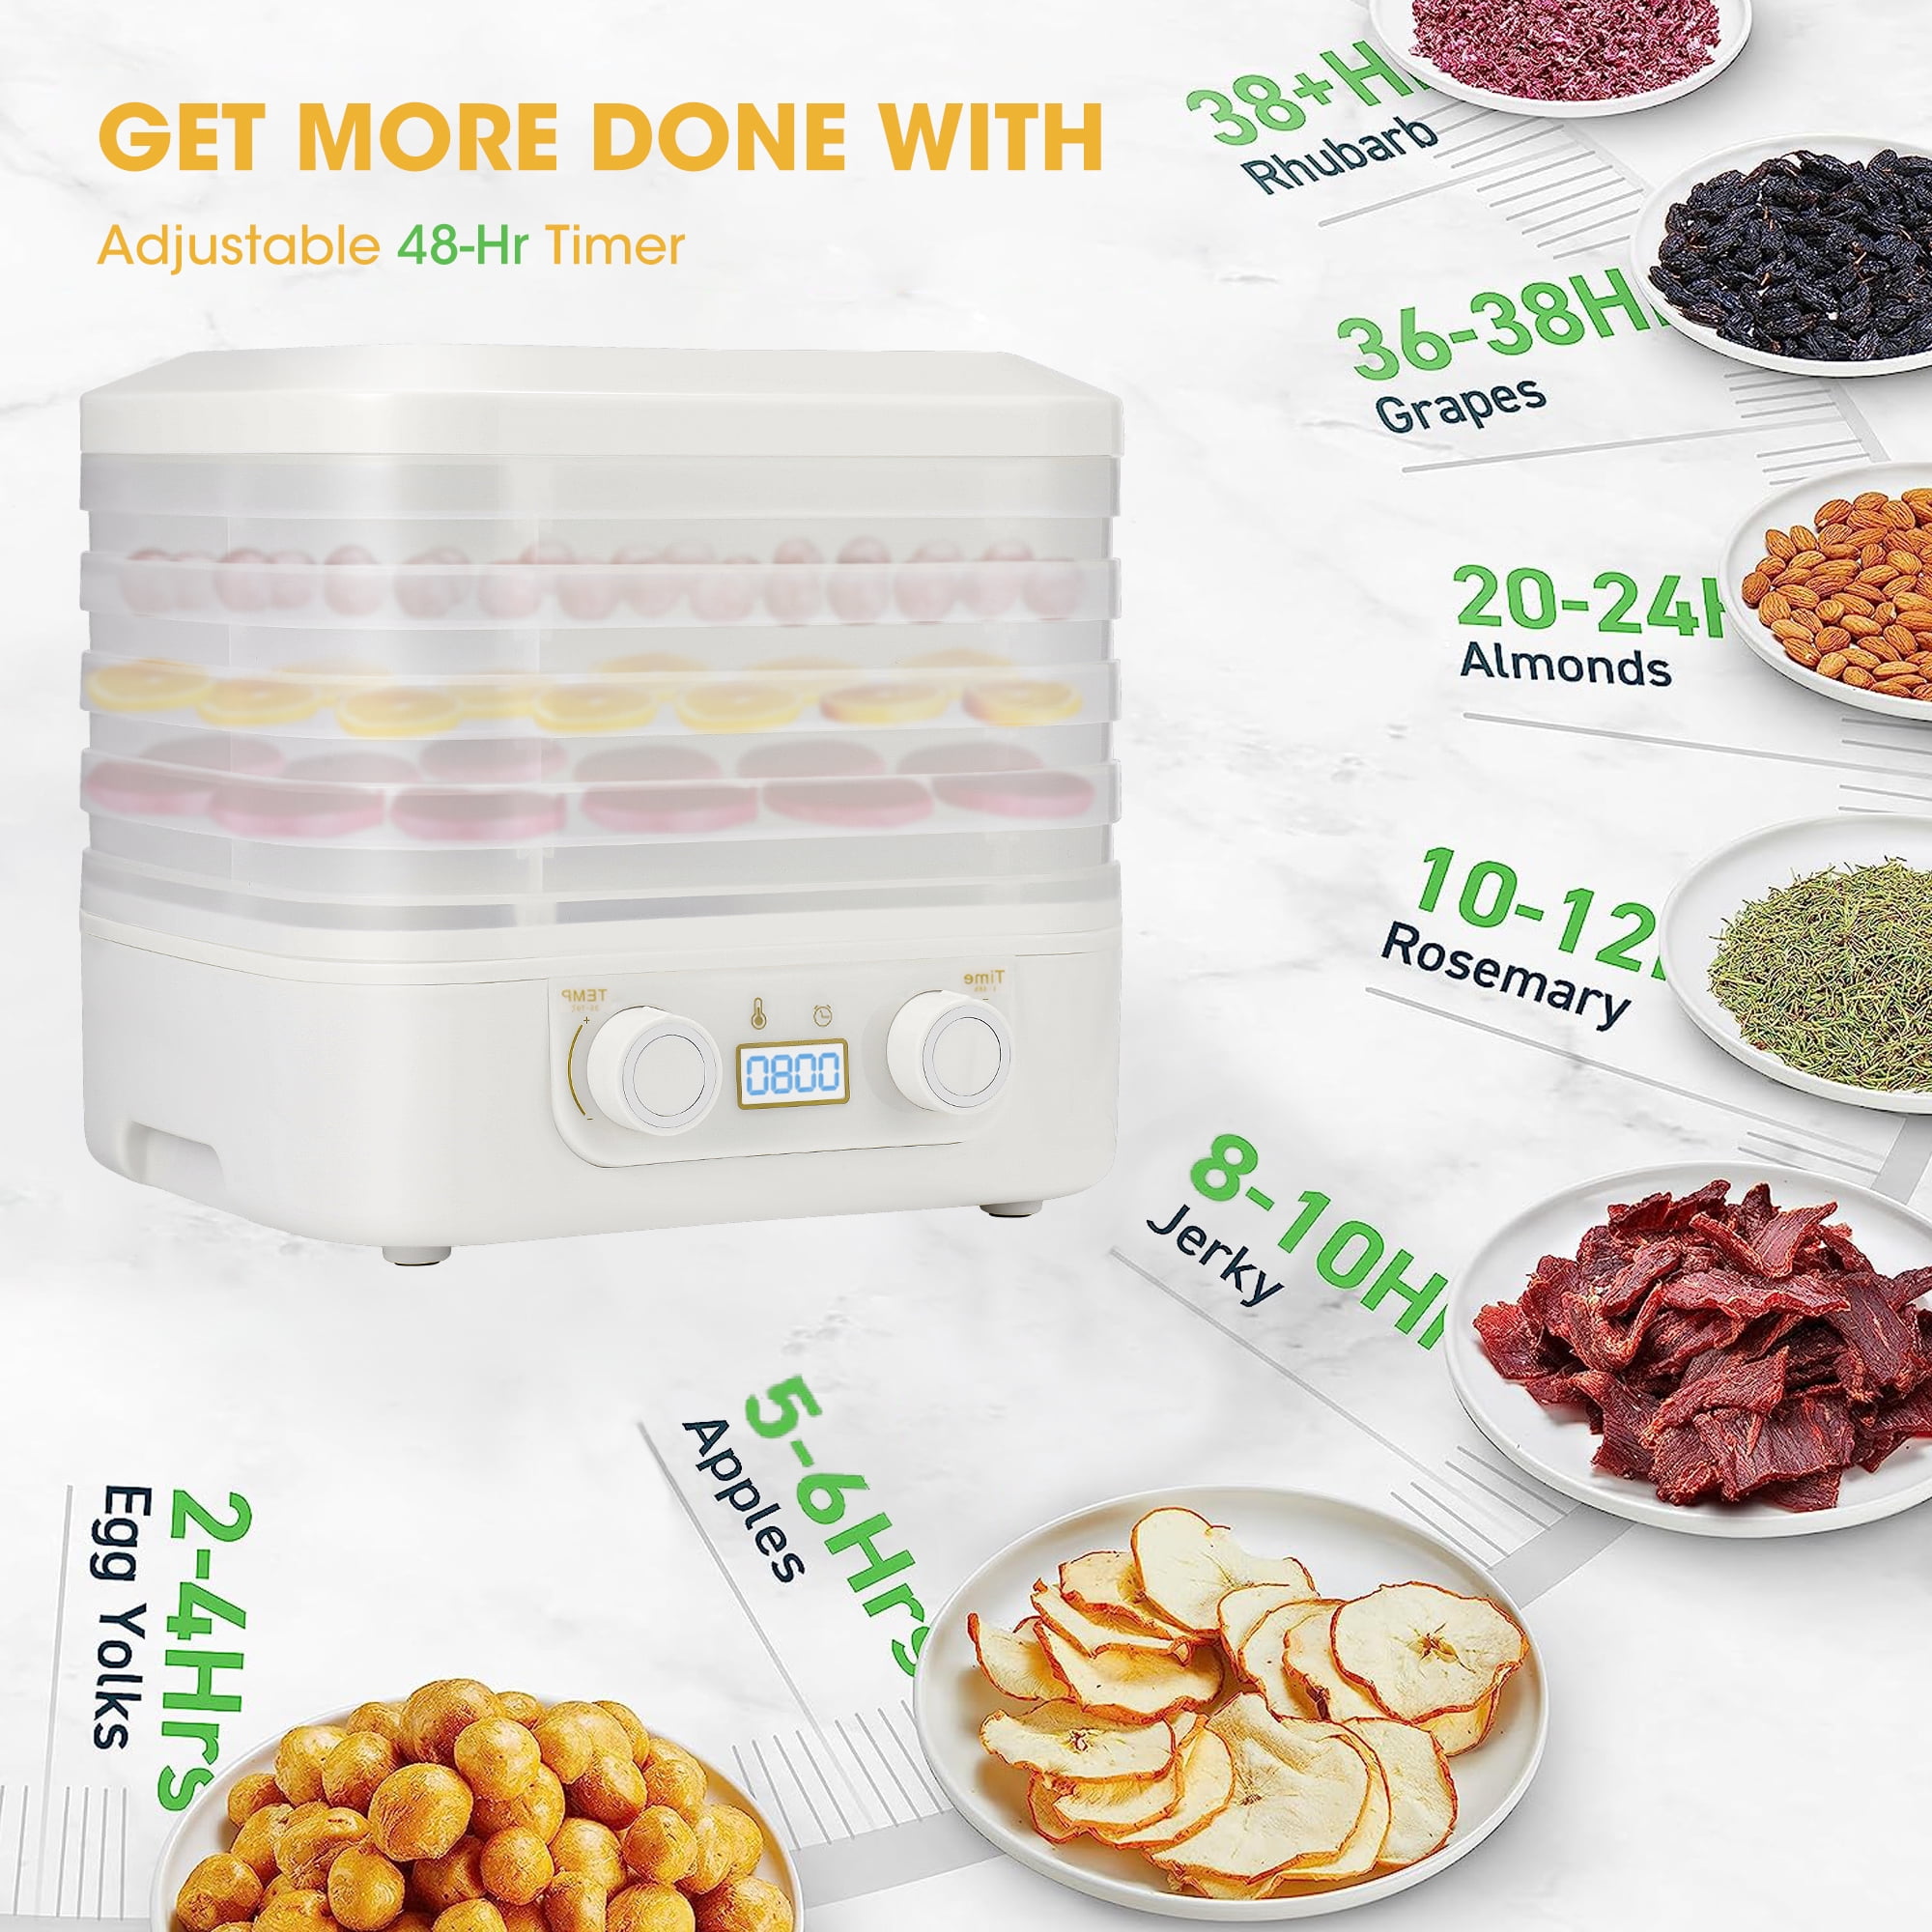 Hakka Food Dehydrator, 8 trays Food Dehydrator Machine for  Jerky/Vegetables/Fruits/Meat/Dog Treats/Herbs, Stainless Steel, 700W